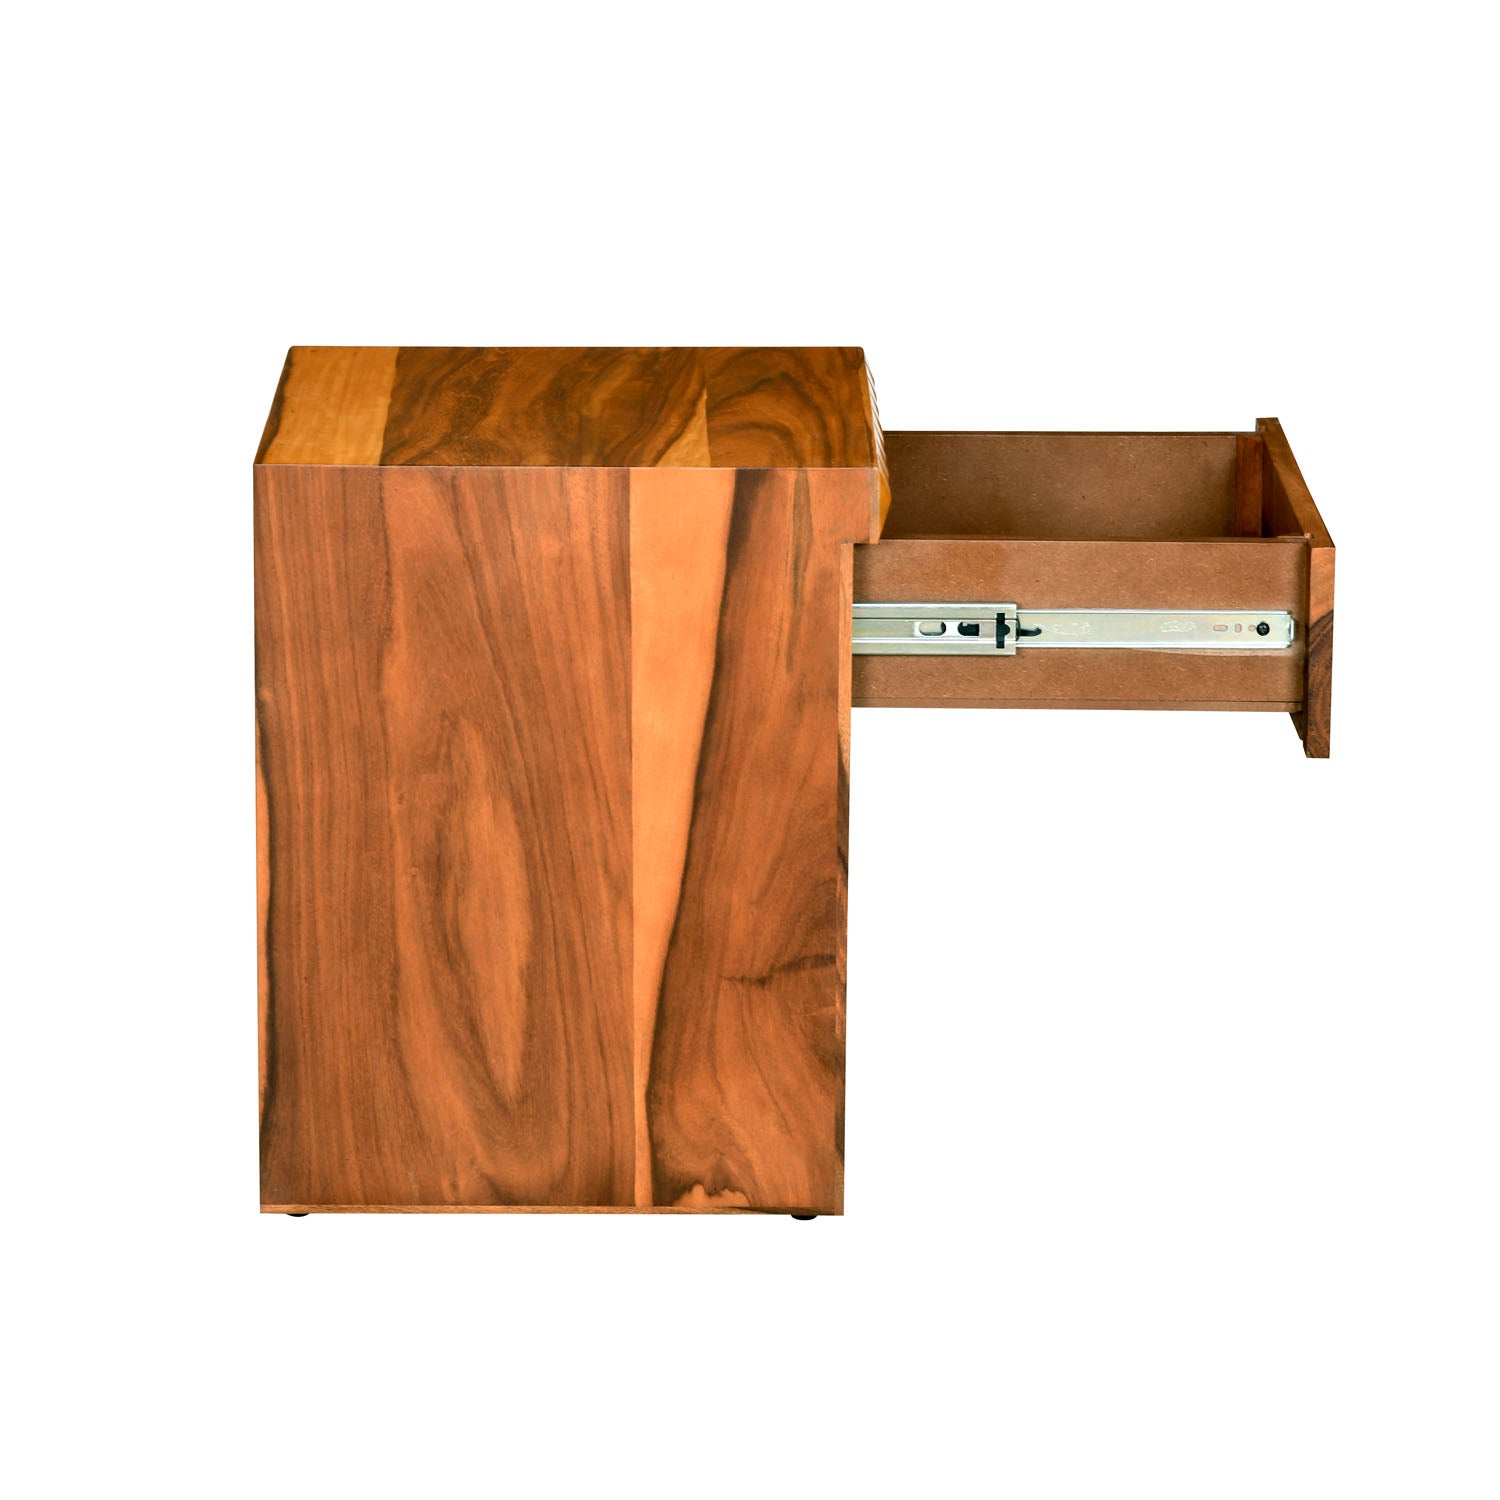 Dewsbury Solid Wood Nightstand with Drawer Storage (Walnut)